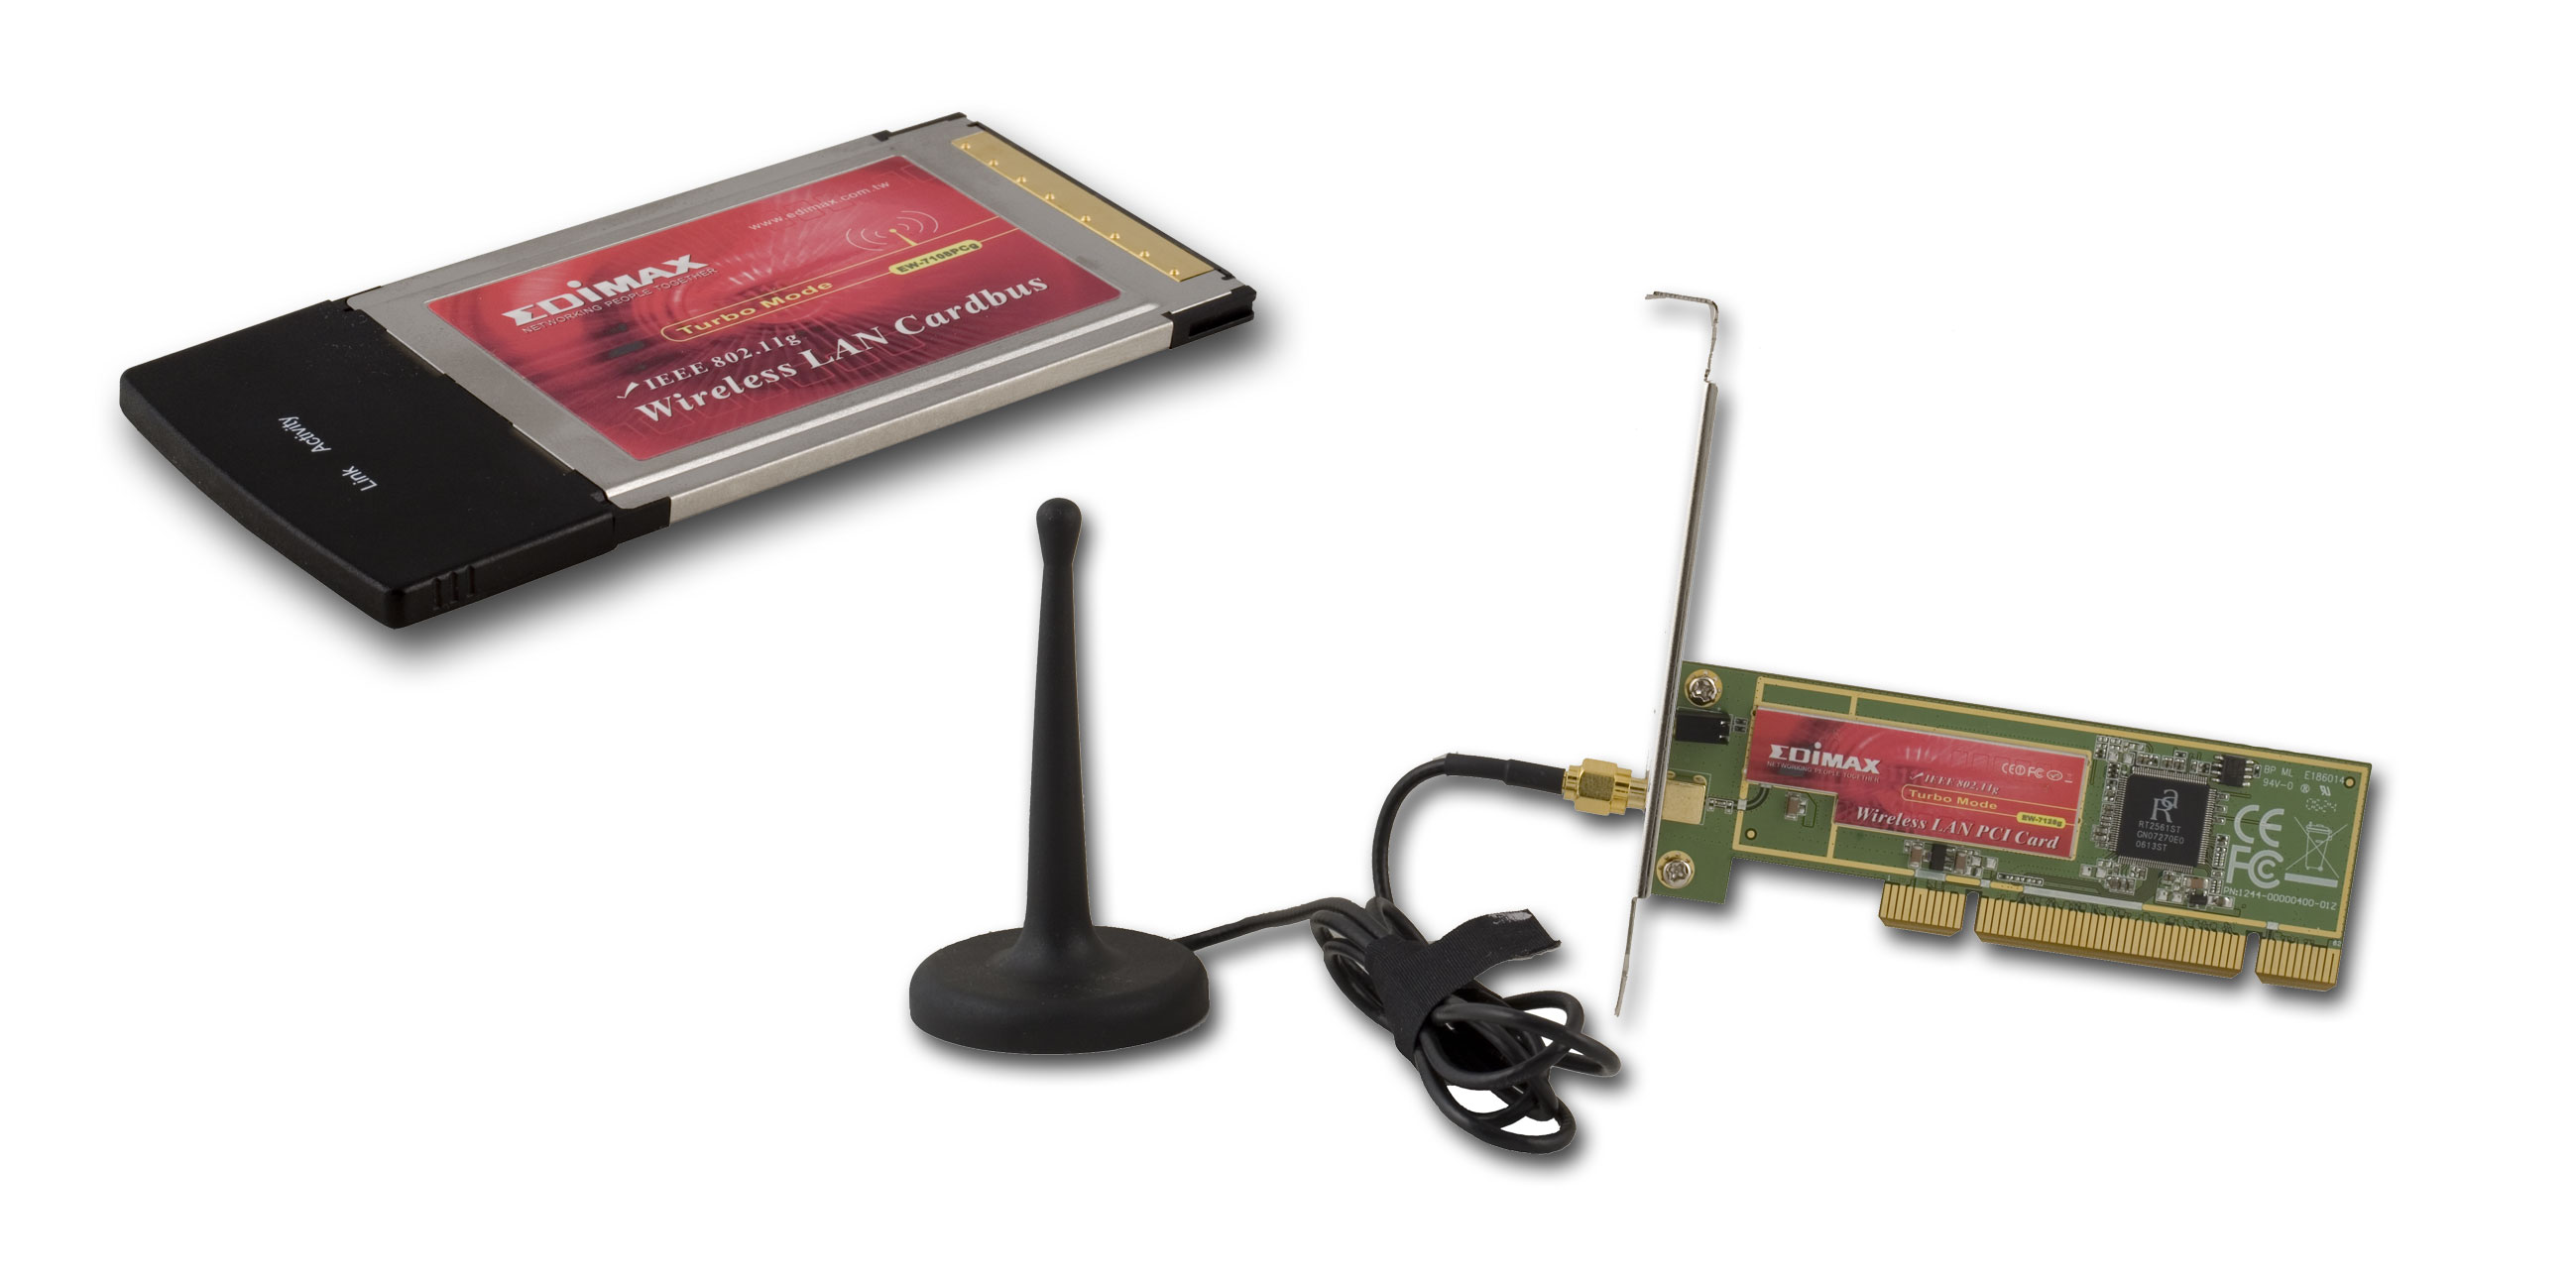 ralink wireless lan card driver vista 32bit download